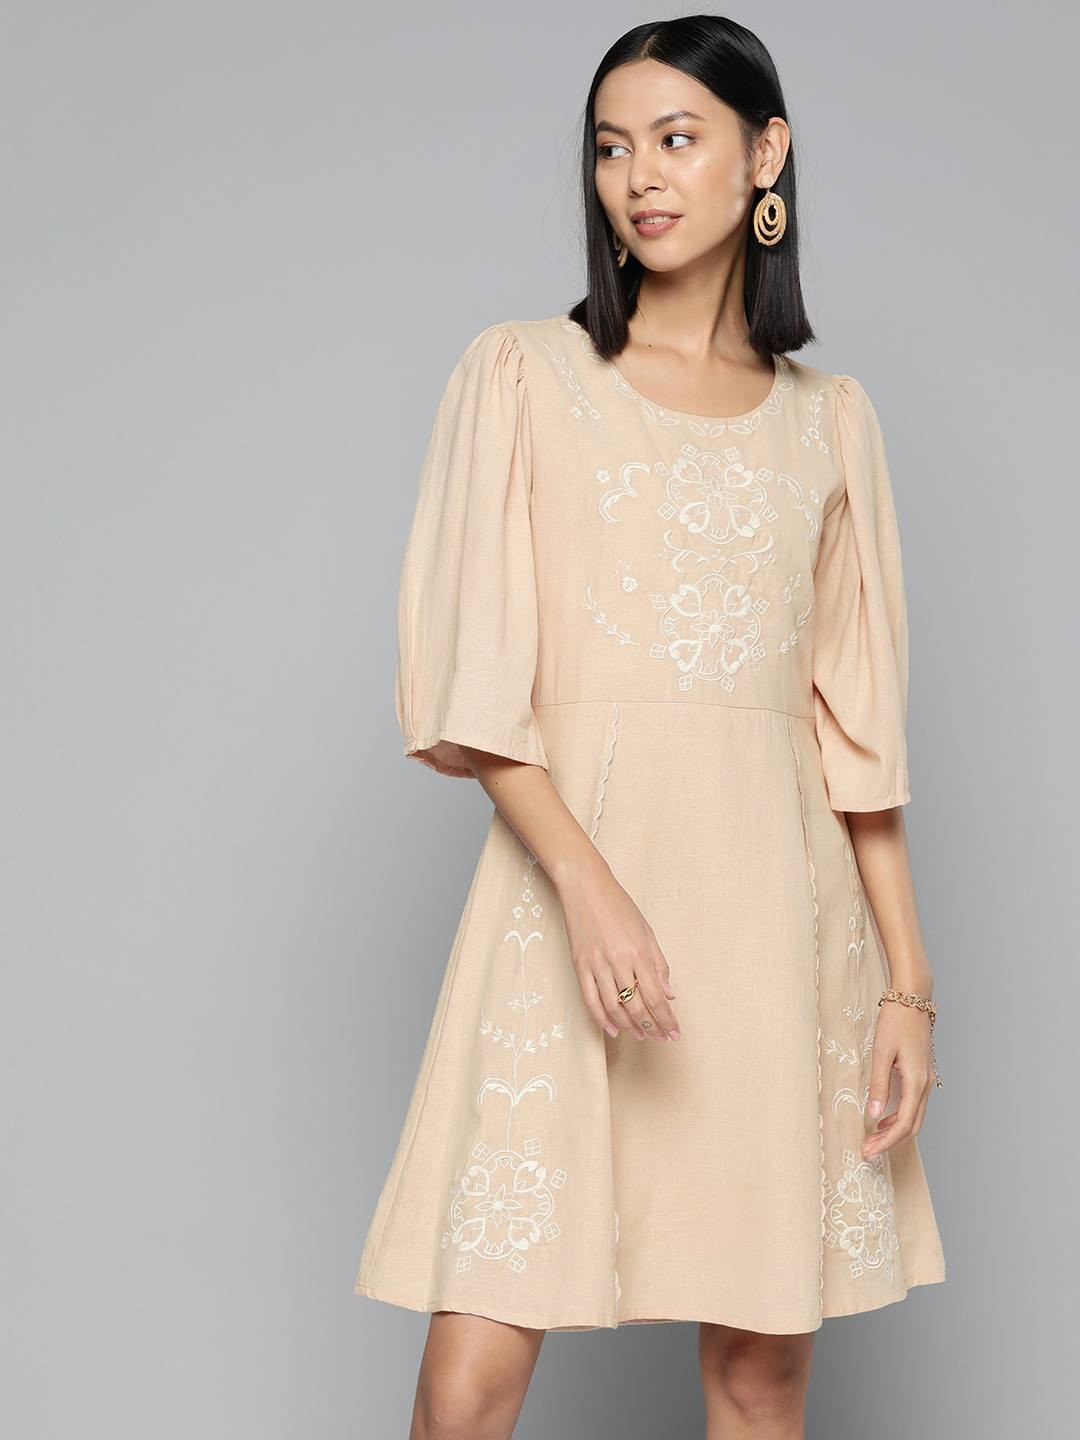 Beige Embroidered Cotton Linen Dress